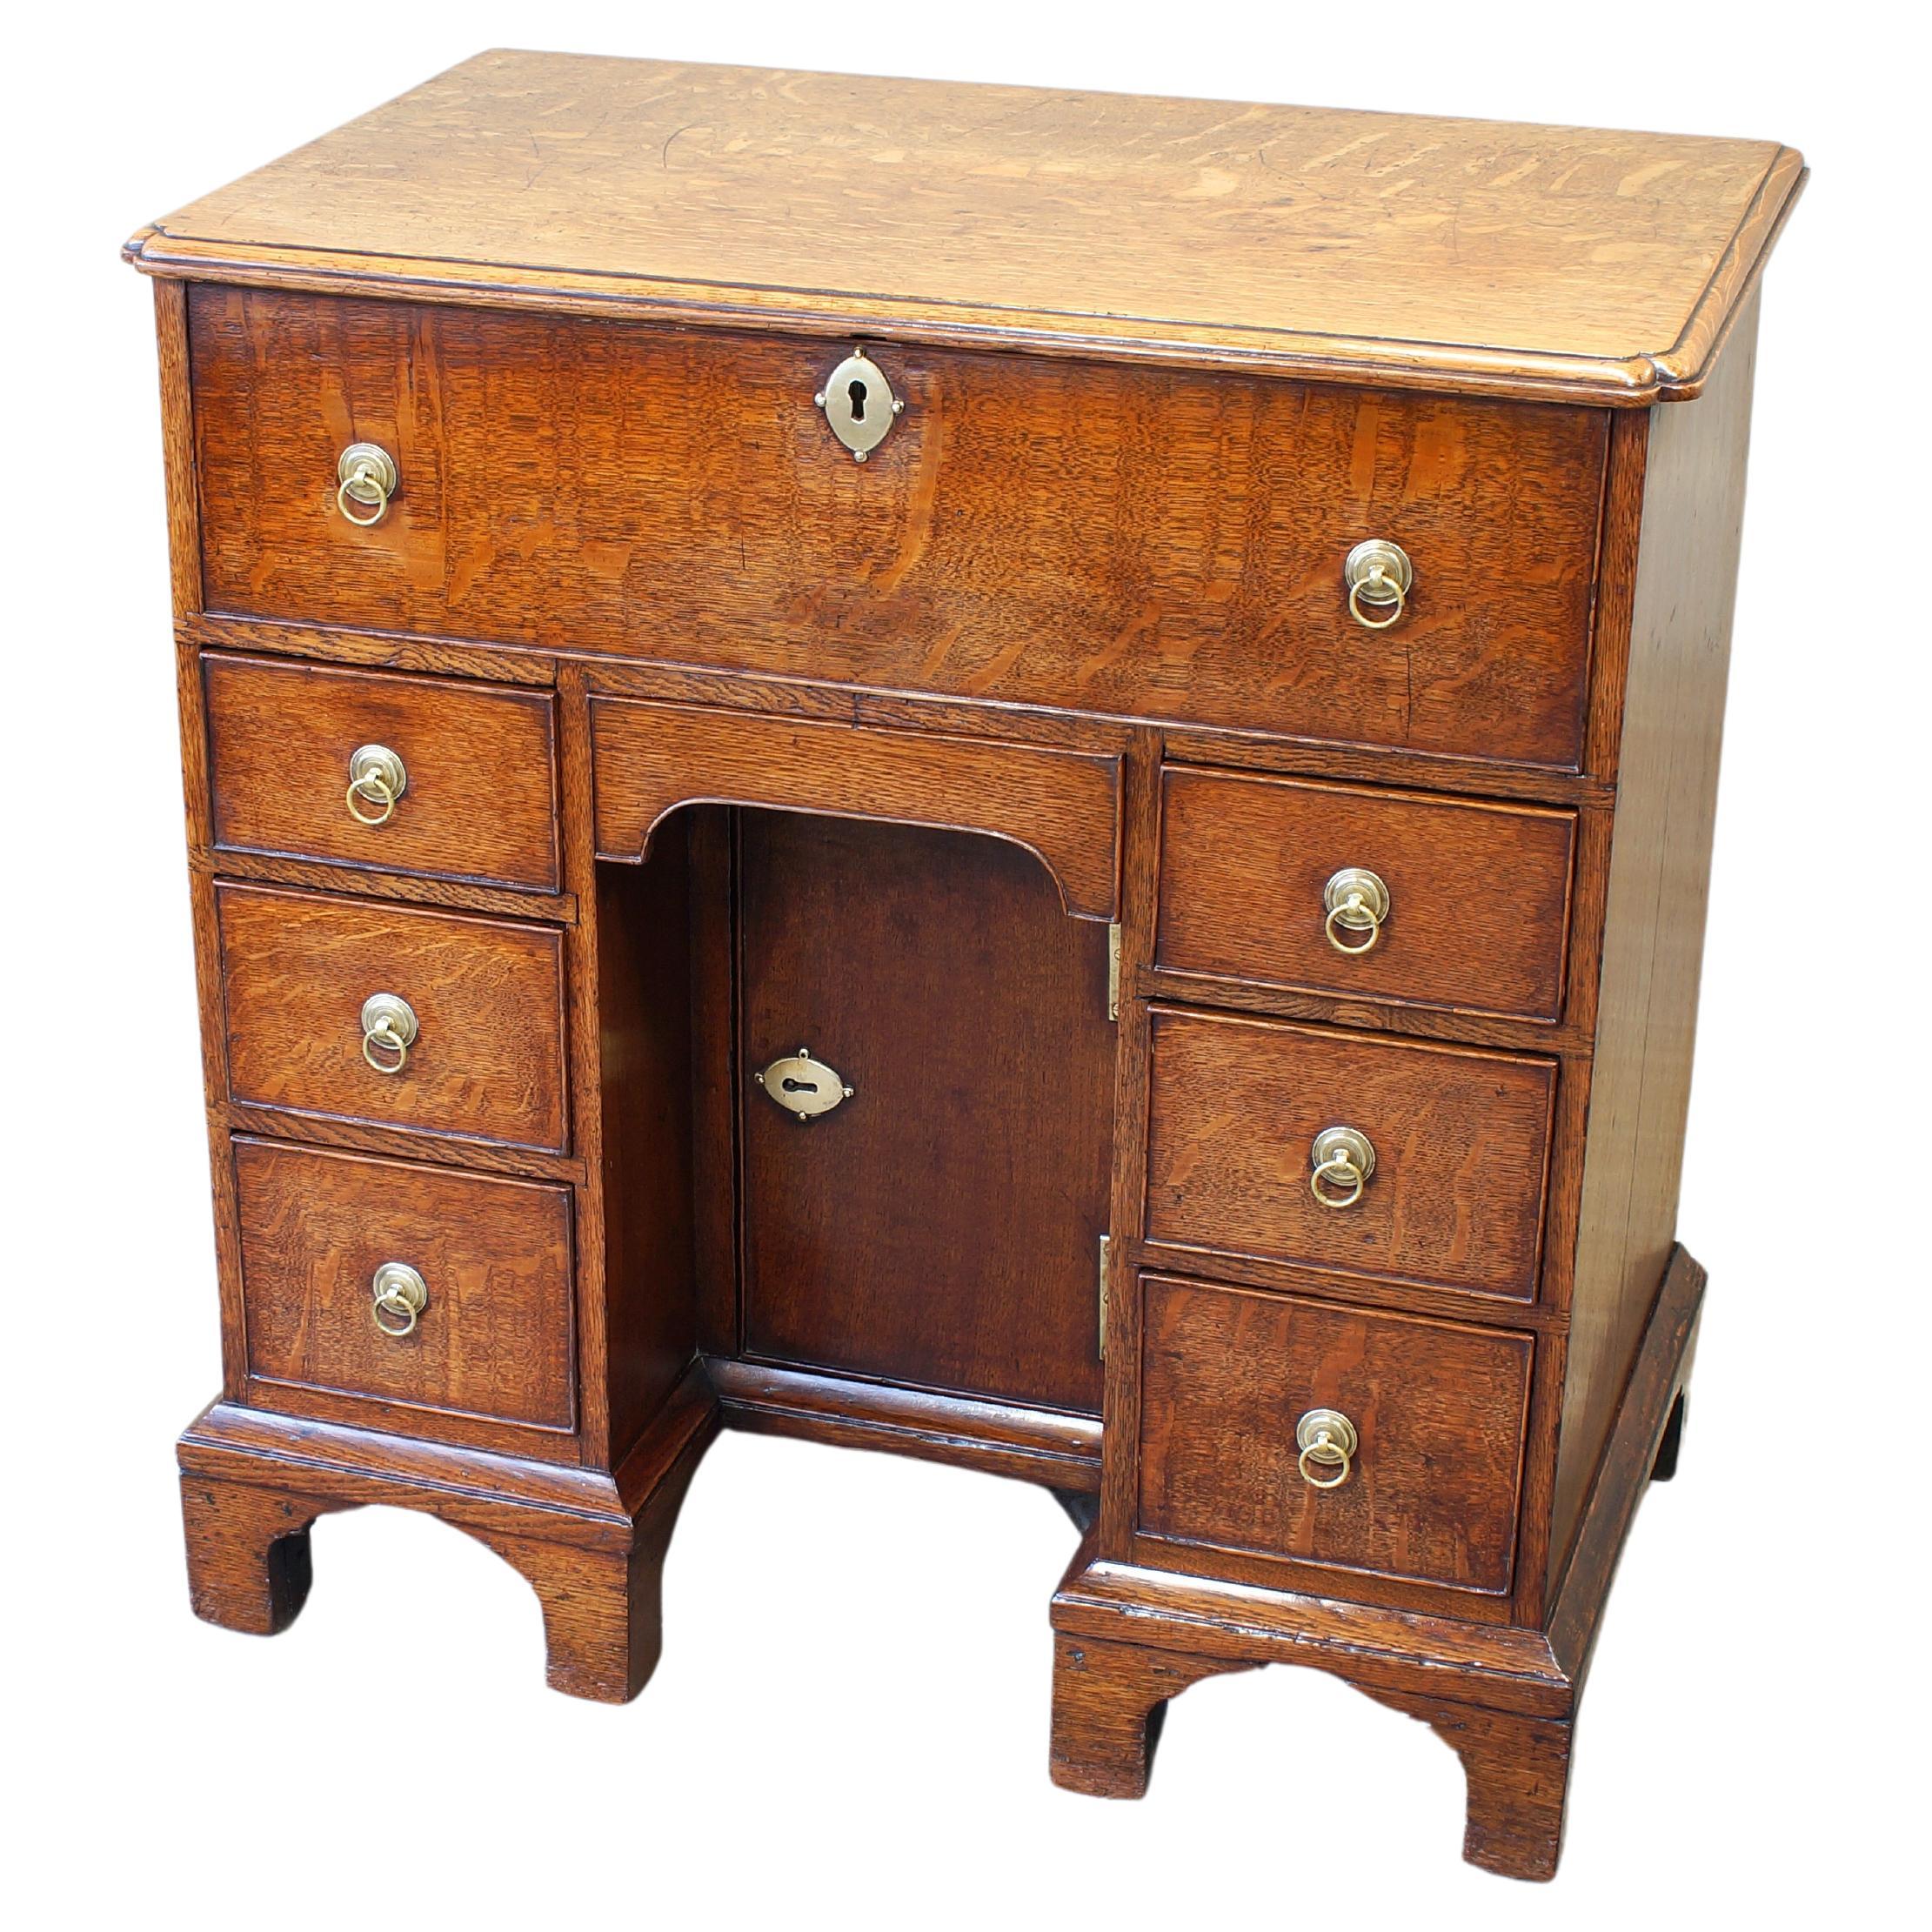  A Small English 18th Century Oak Secretaire Kneehole Desk For Sale